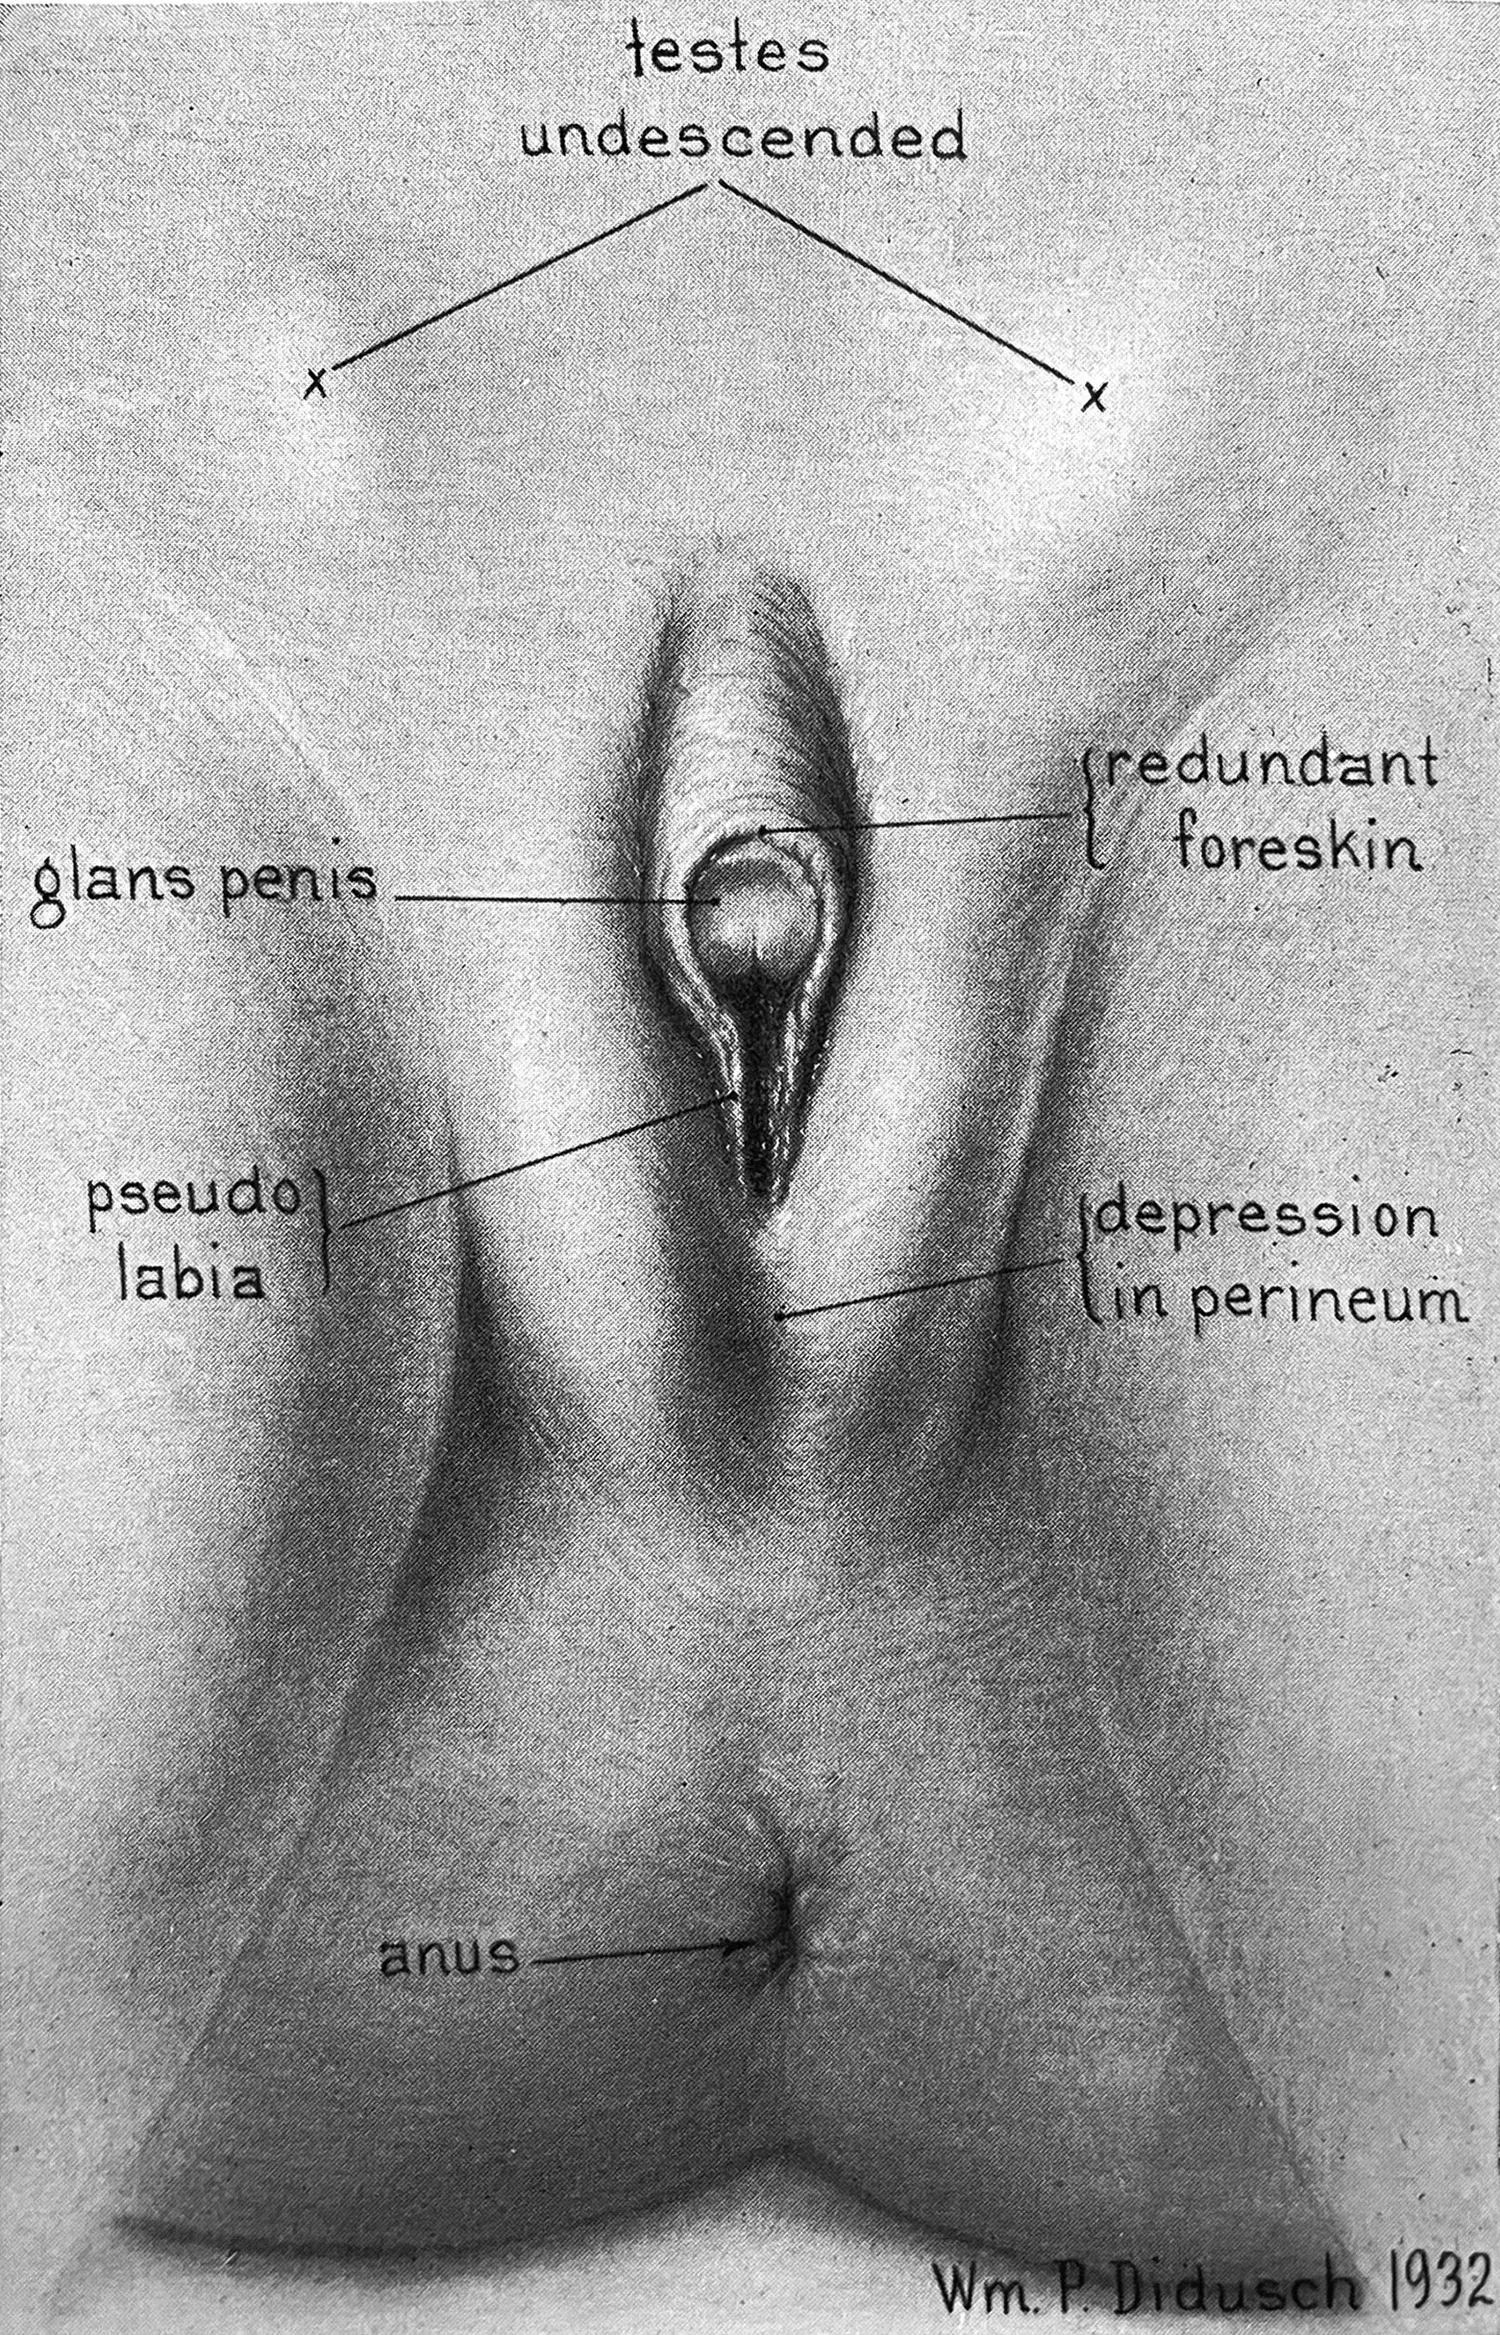 Medical illustration accompanying the case study portrays “testes undescended,” “glans penis,” “redundant foreskin,” and “pseudo labia.” 